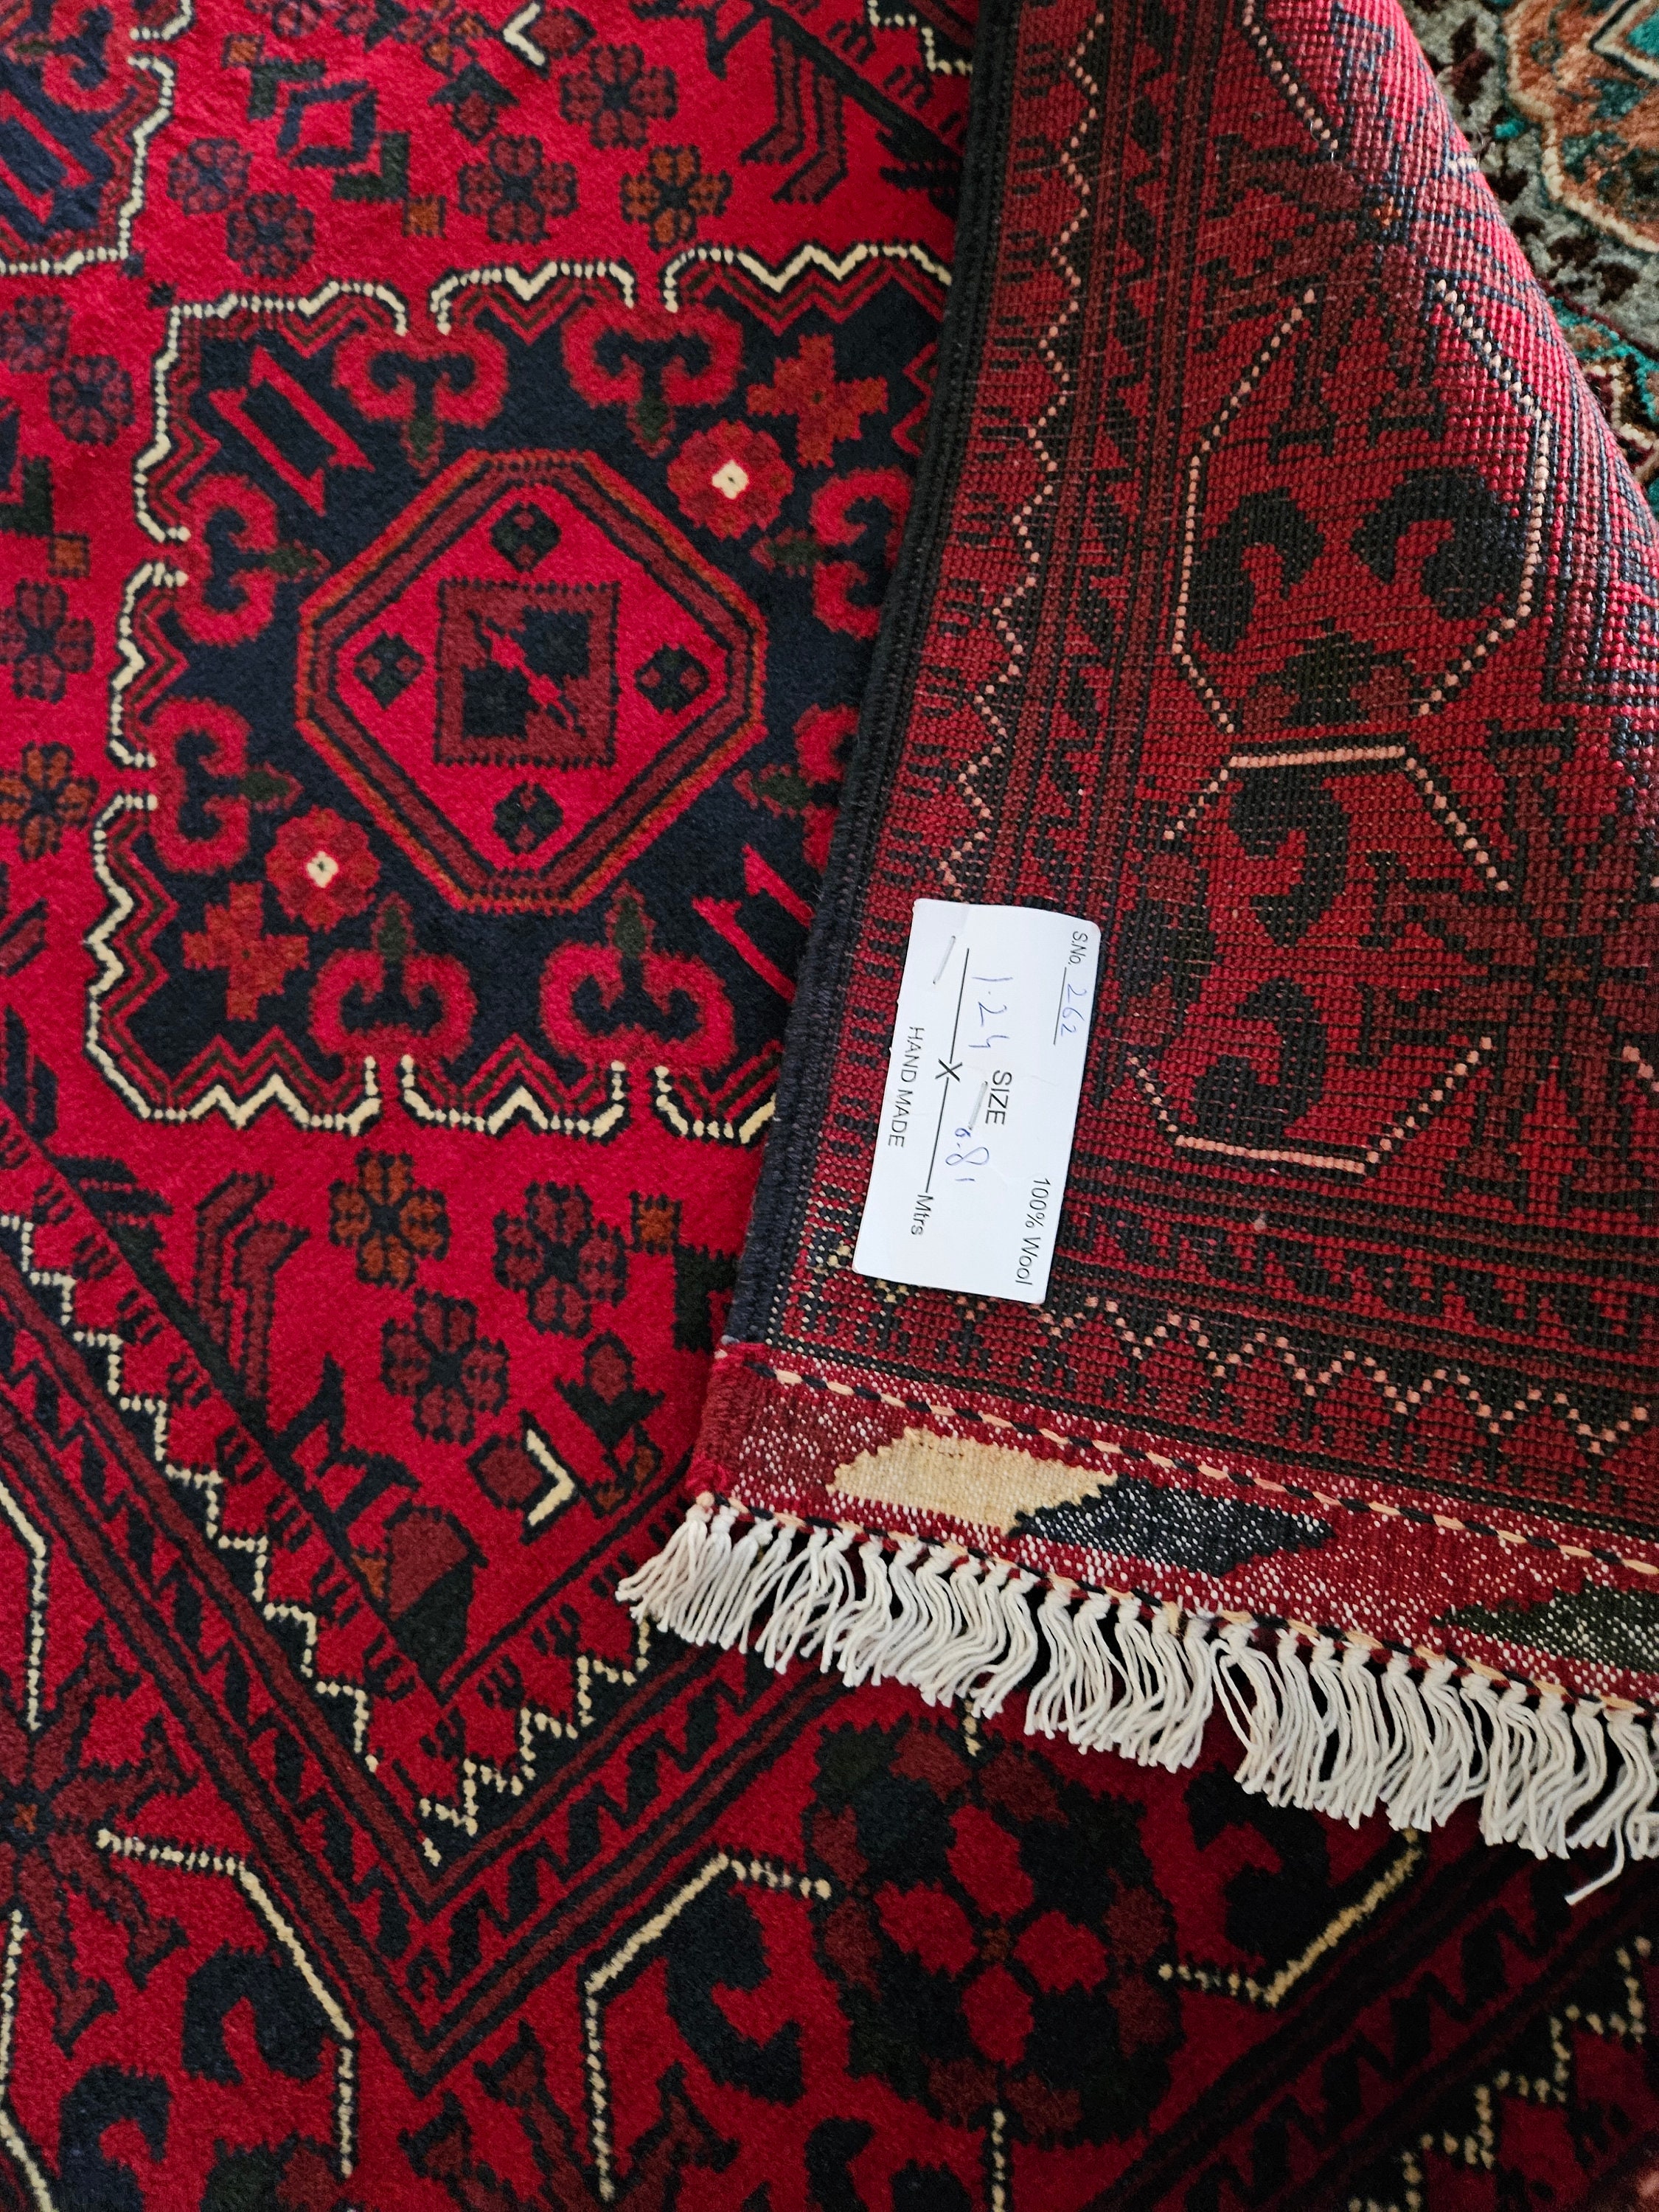 Small Afghan rug, office rug, kitchen rug, nomadic rug, jute rug, colorful rug, floor rugs, area rugs, home decor modern, bedroom rug, decor